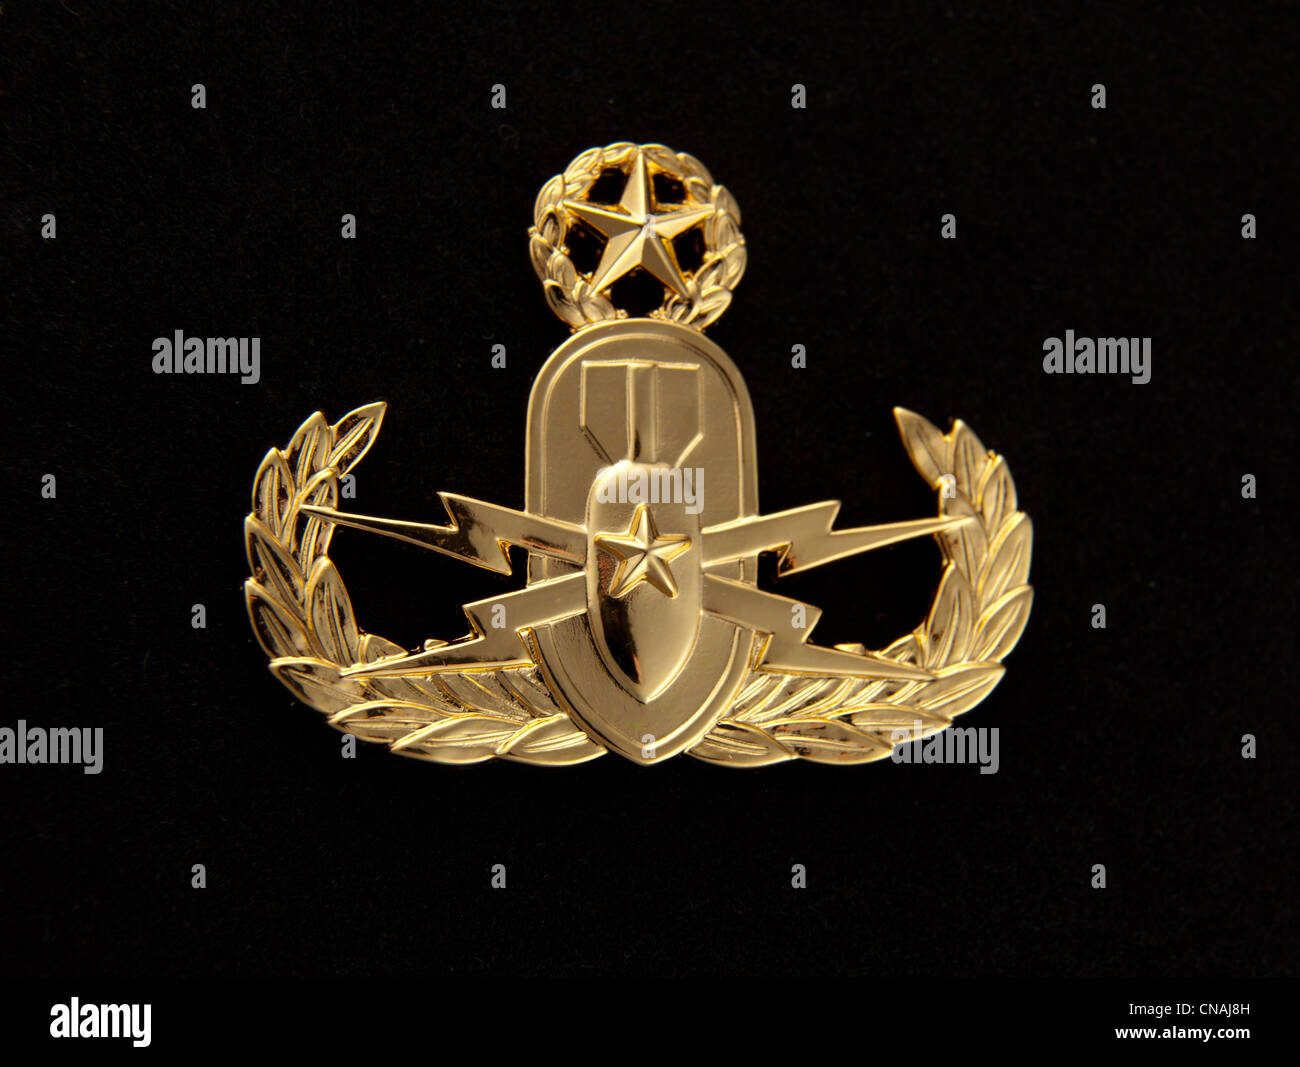 US Navy Officer Master Explosive Ordnance Disposal (EOD) badge